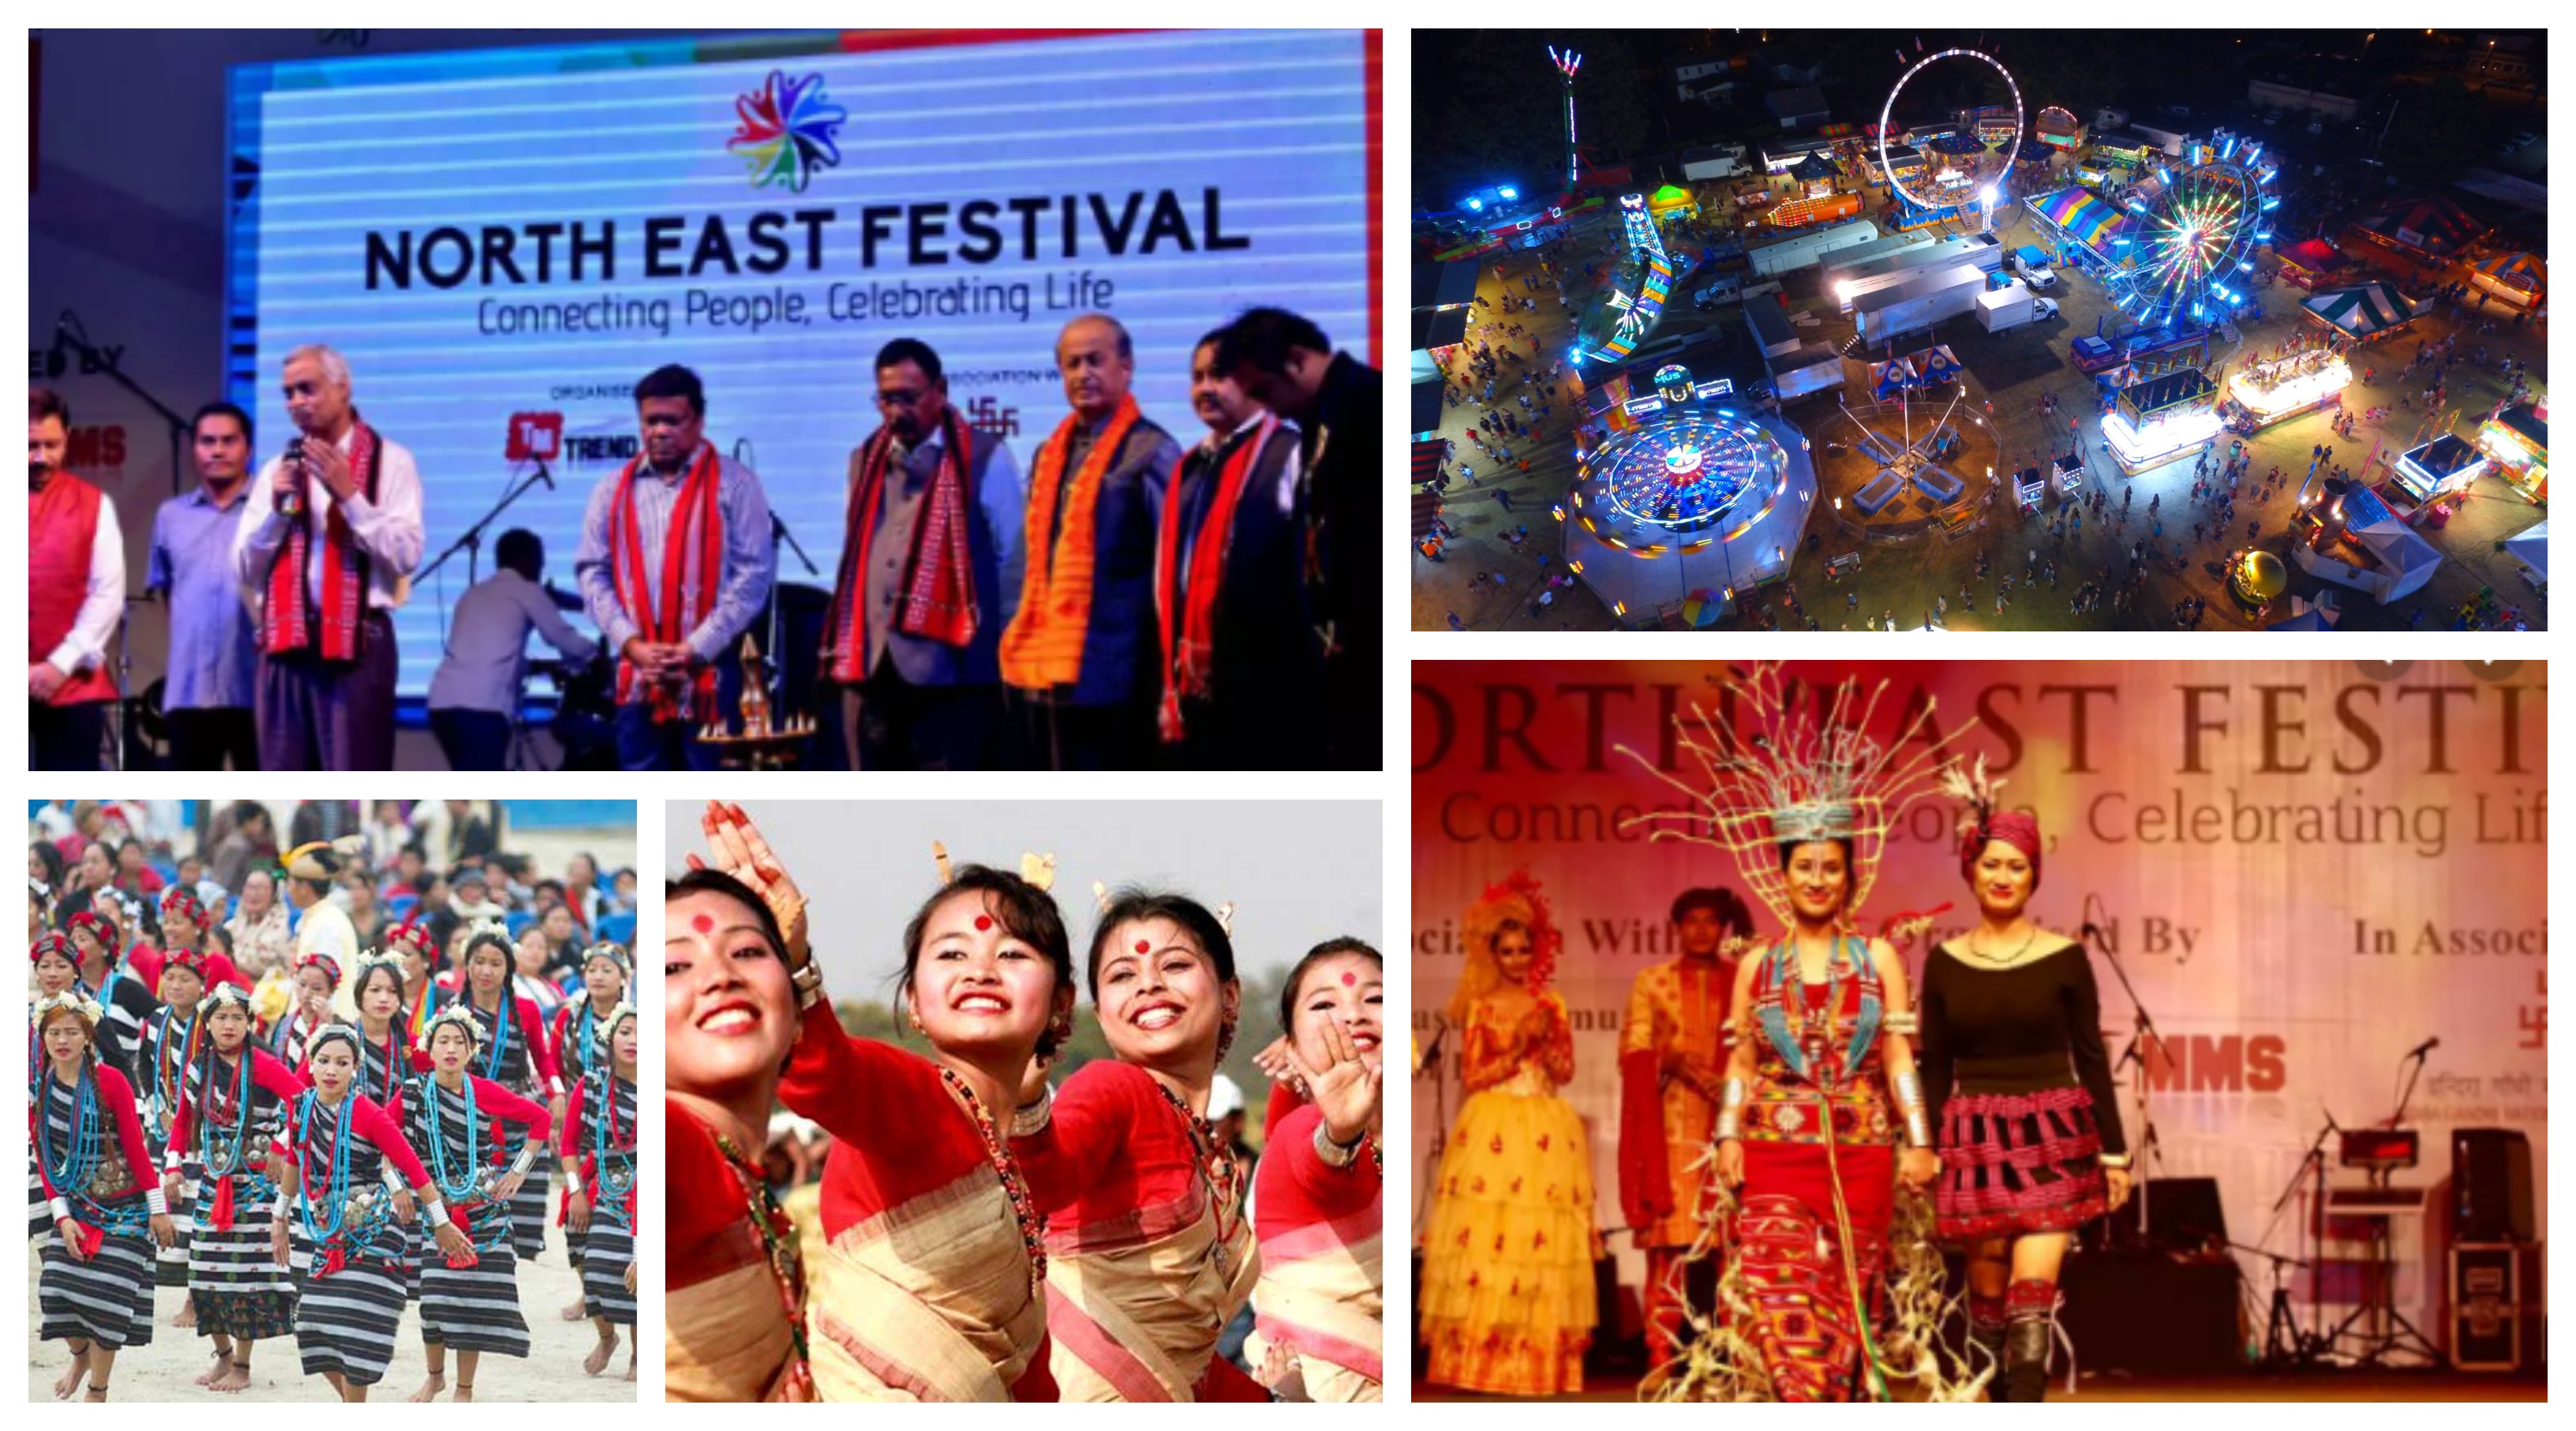 North-east festival 2019 at Janpath